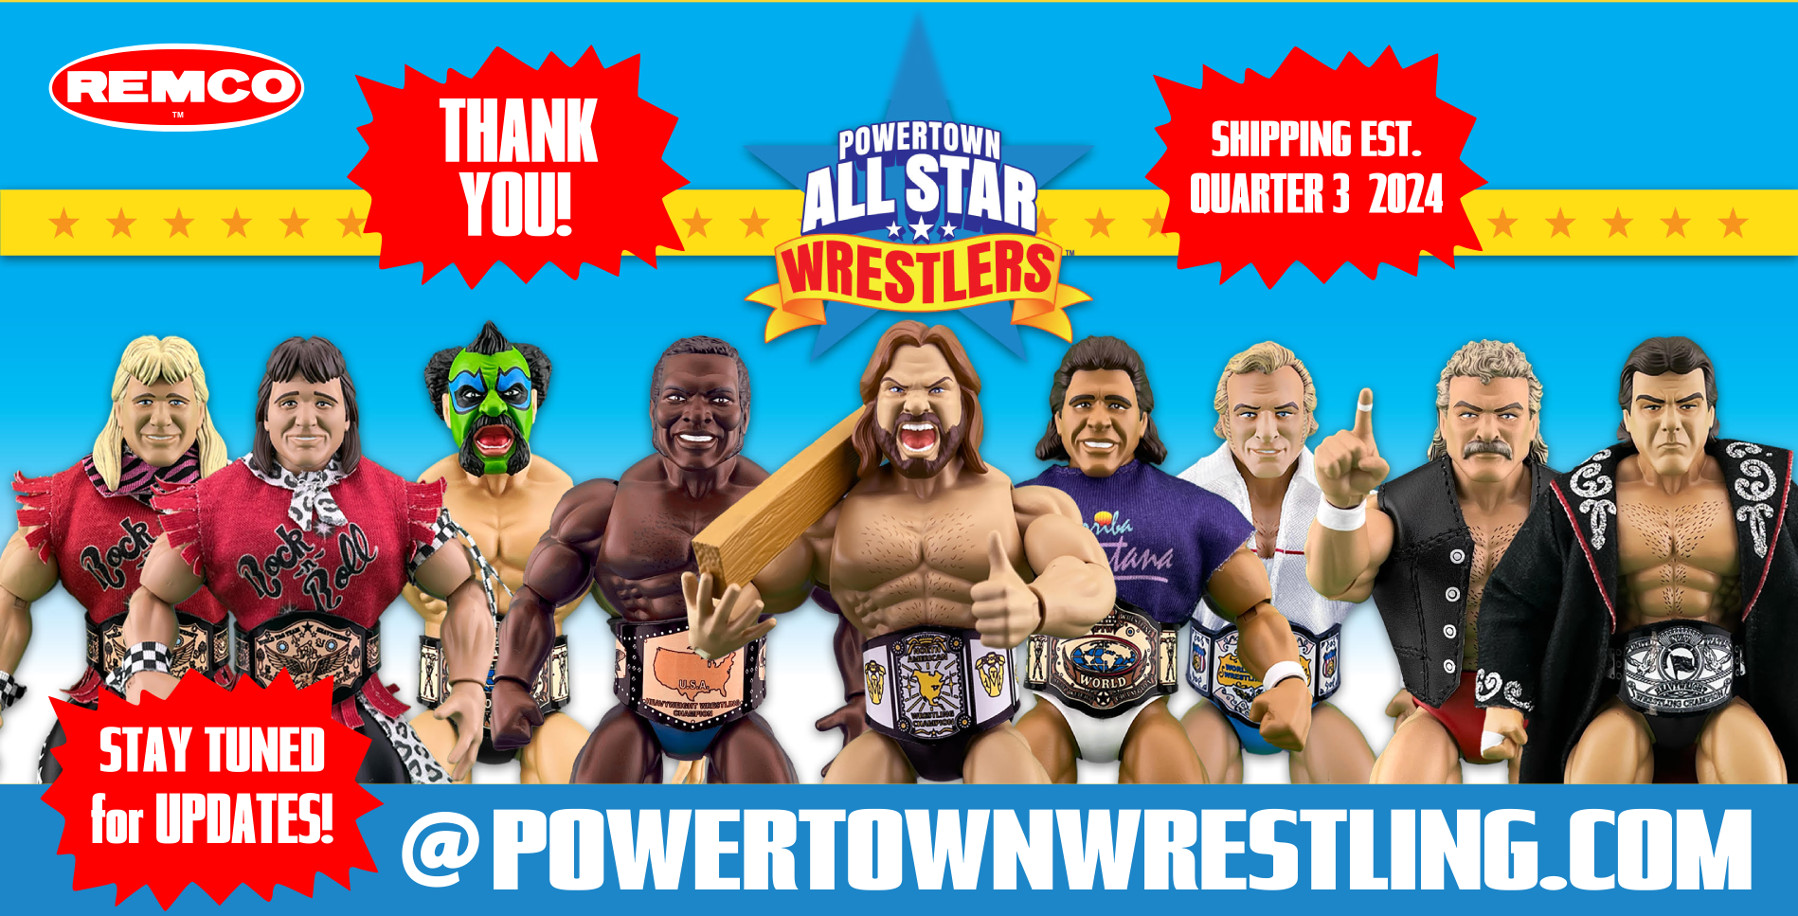 Remco Powertown AllStar Wrestling Action Figures